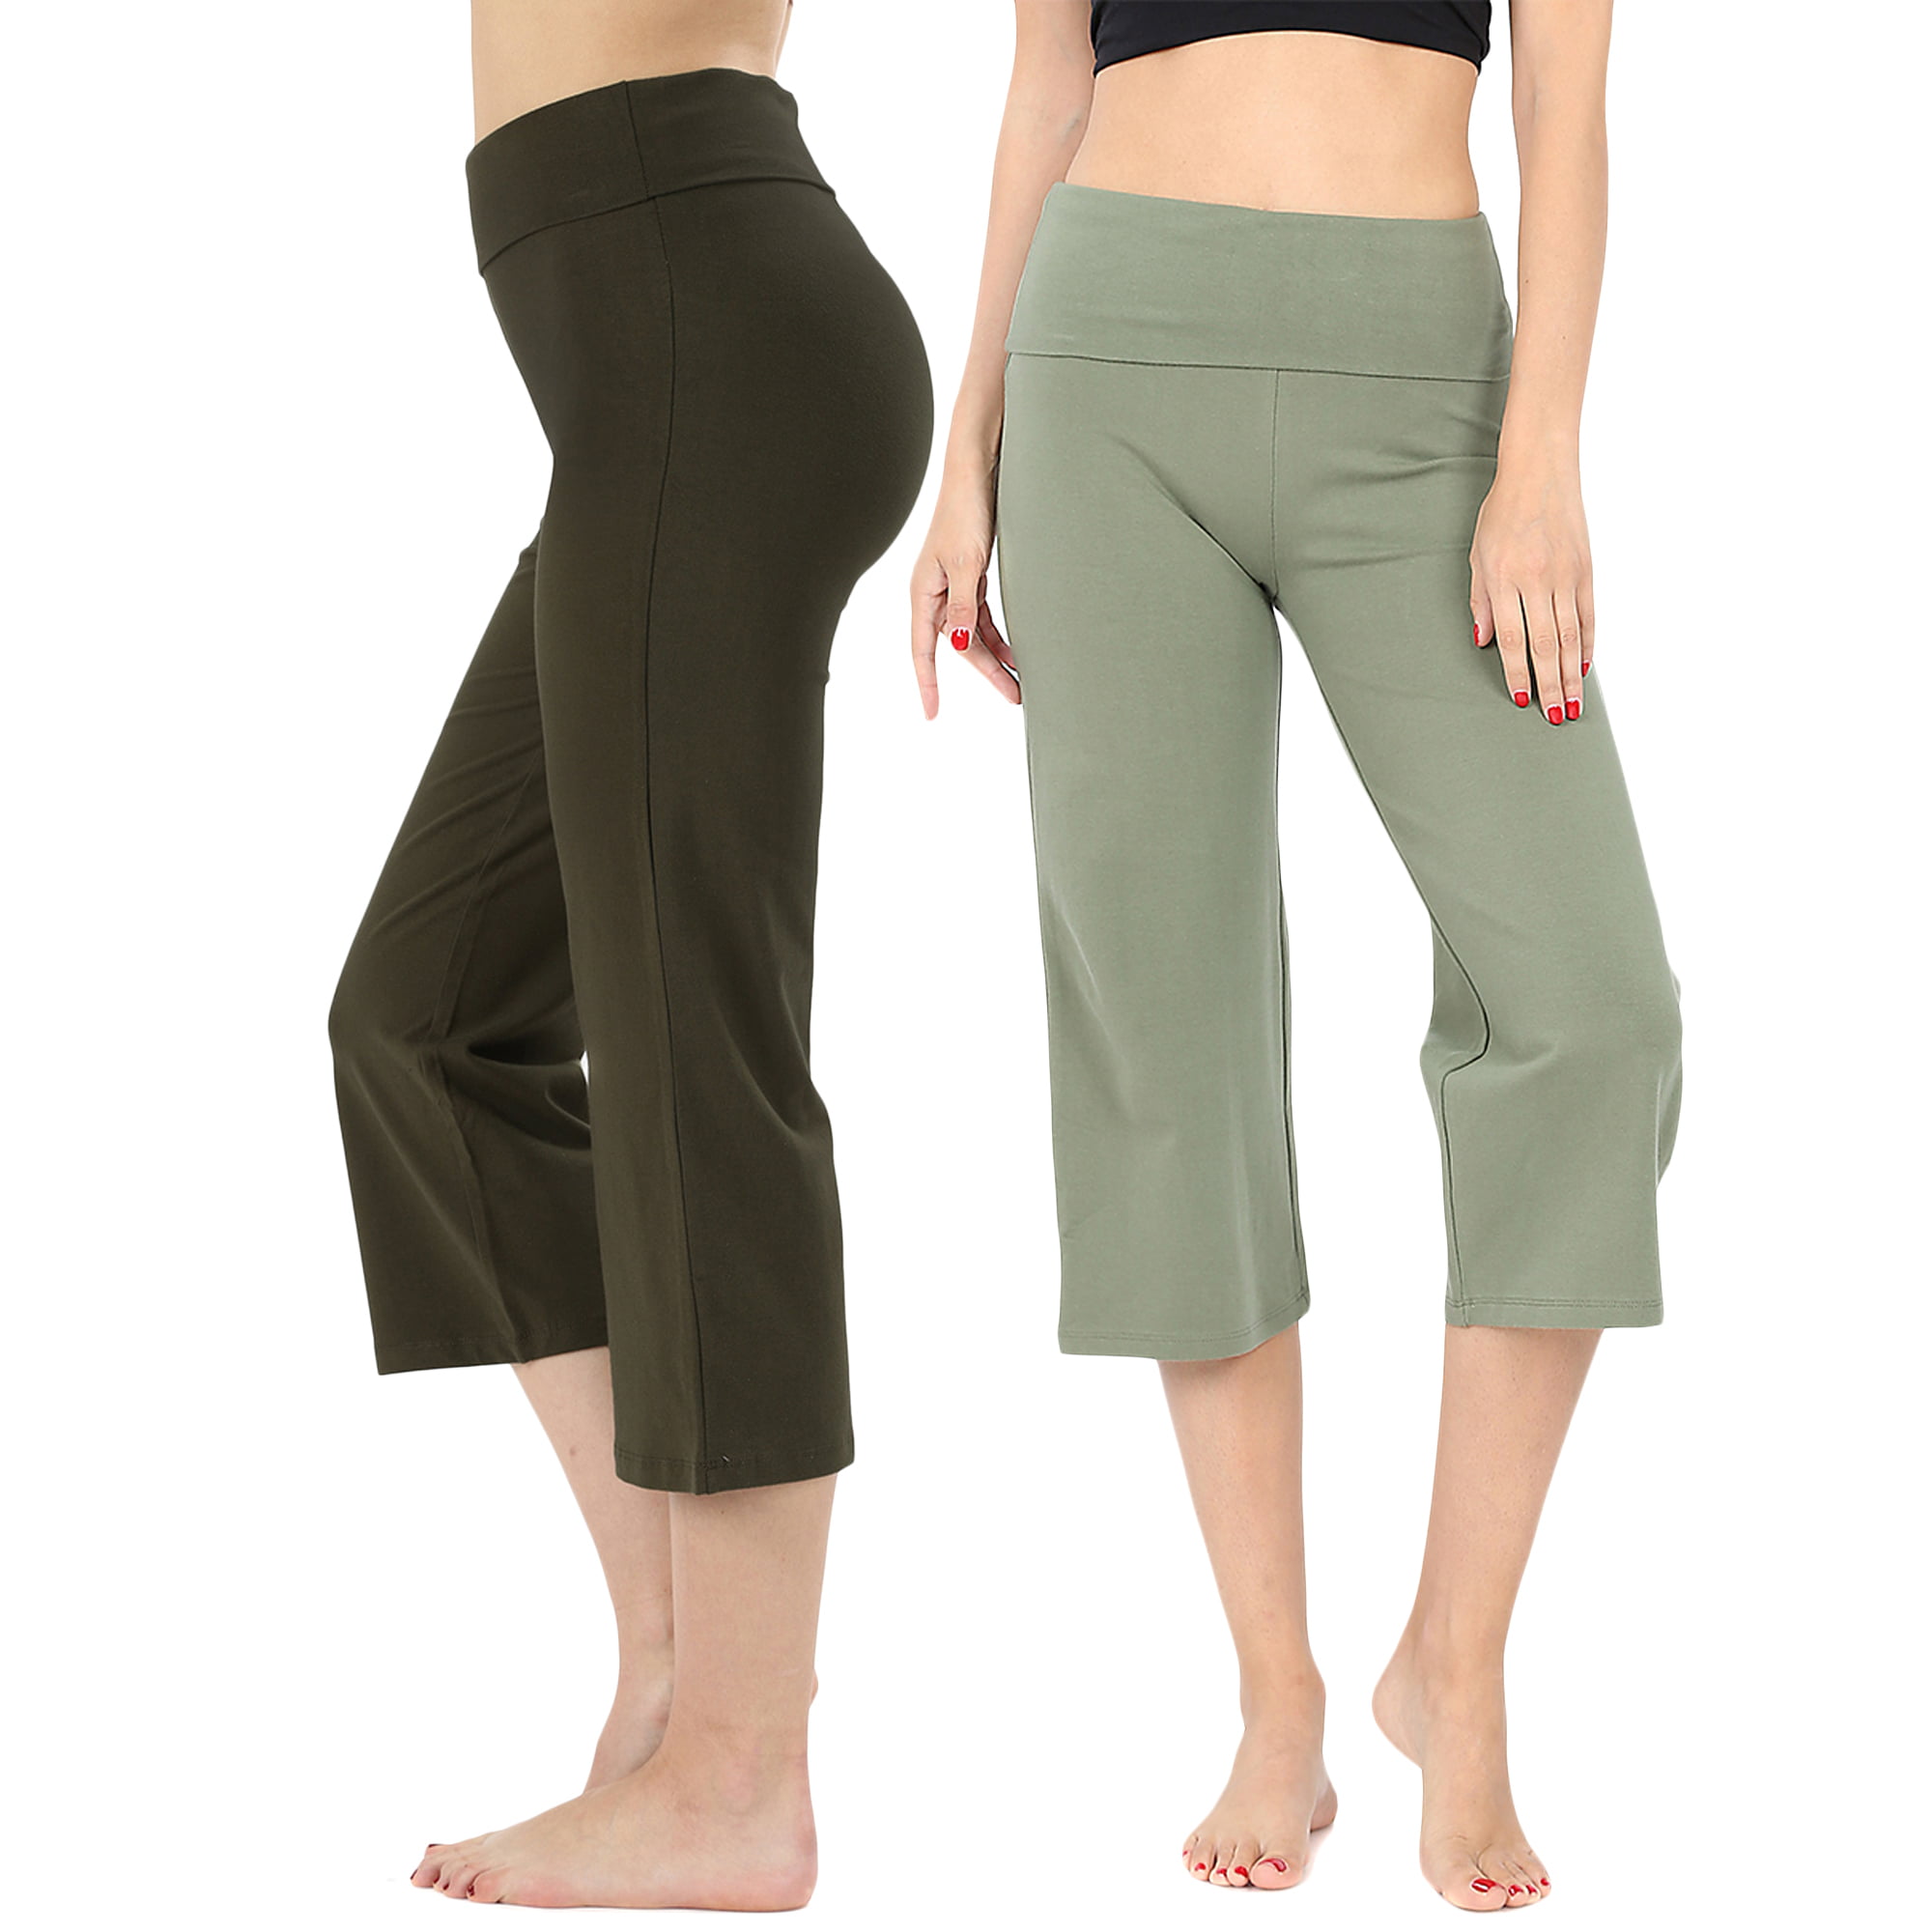 Women's Cotton Fold Over Capri Lounge Yoga Pants (S-3XL) - Walmart.com